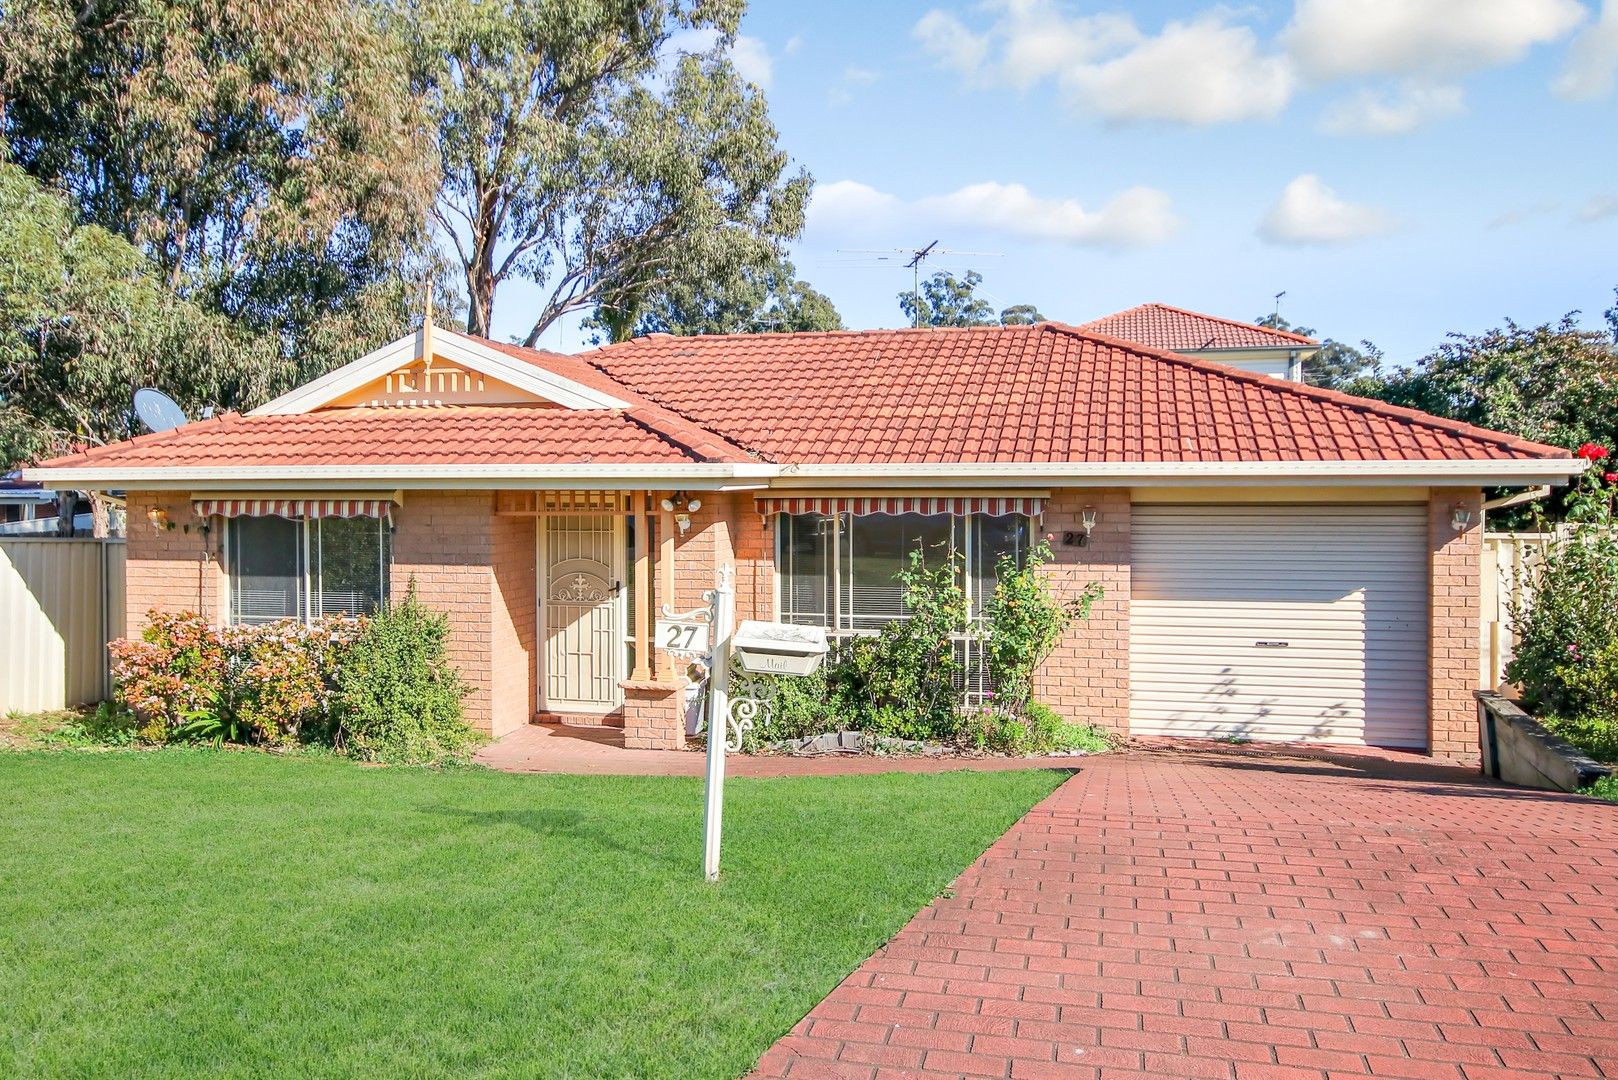 3 bedrooms House in 27 Appletree Grove OAKHURST NSW, 2761